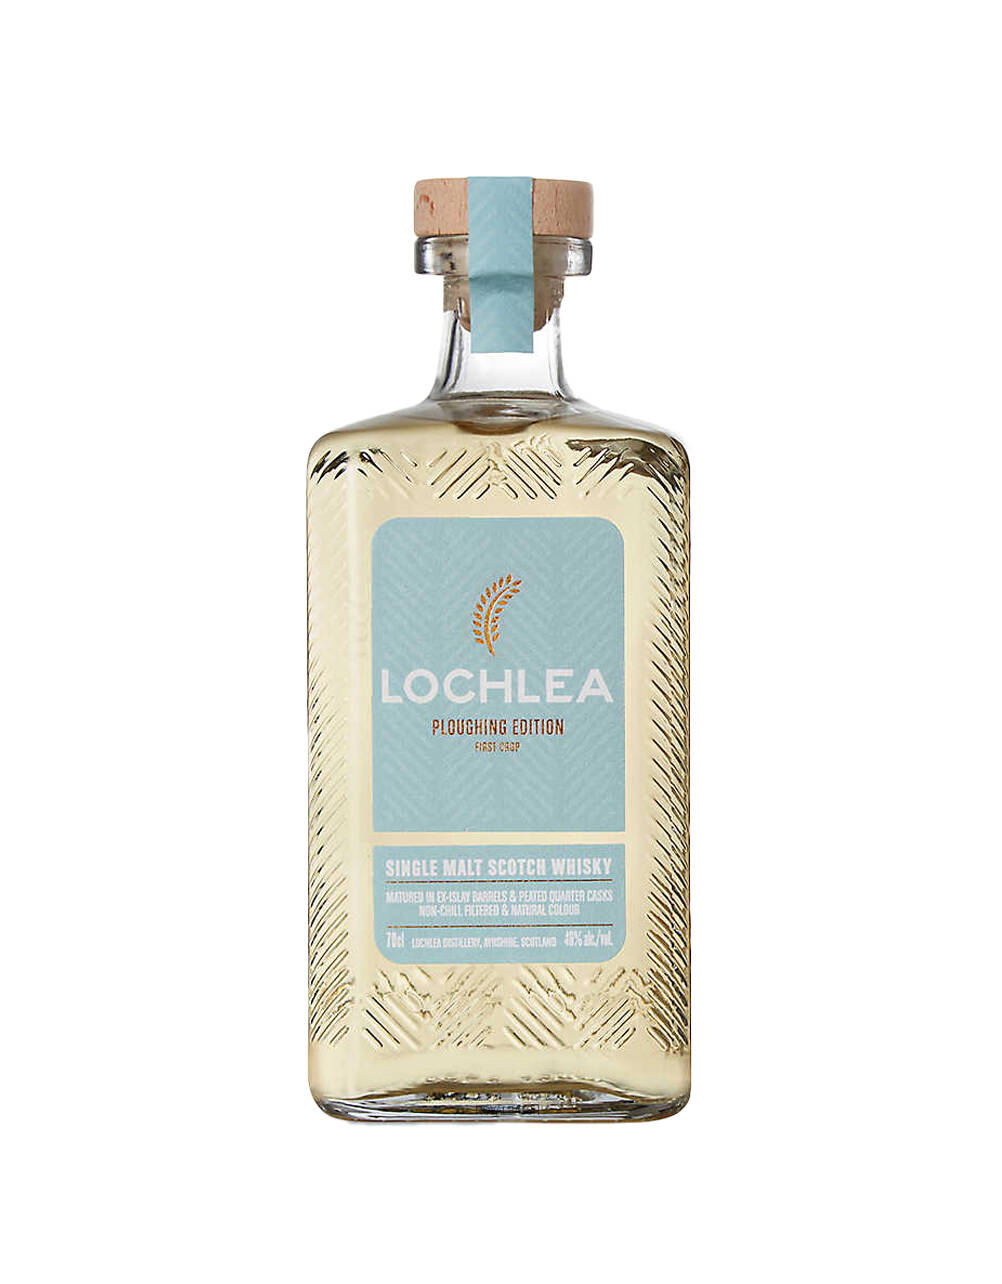 Lochlea Ploughing Edition Single Malt Scotch Whisky